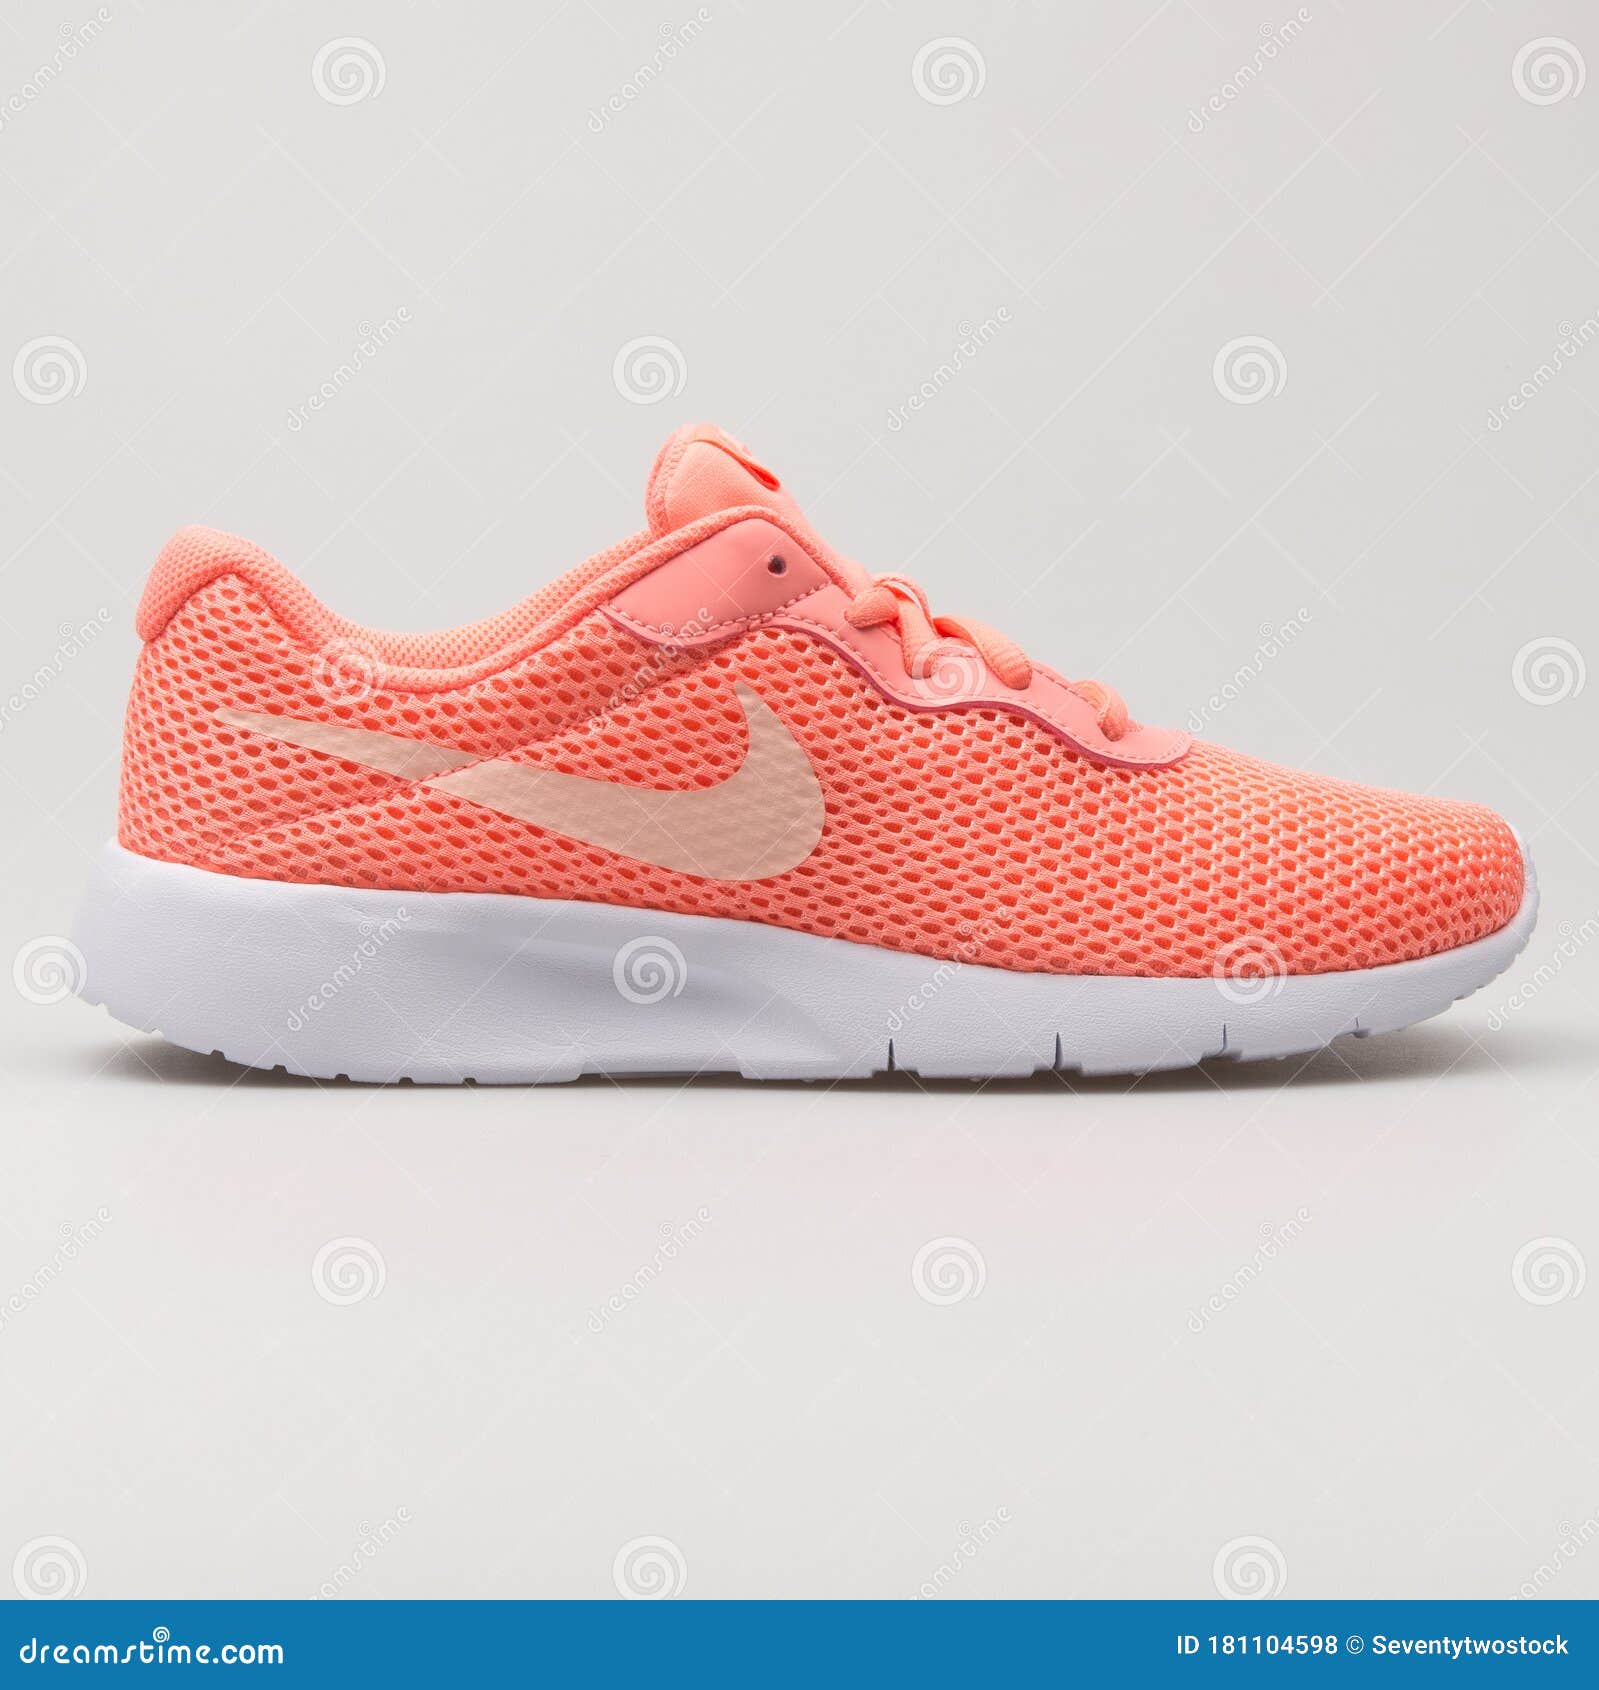 Nike Tanjun Pink and White Sneaker Editorial Stock Photo - Image of shoe,  casual: 181104598